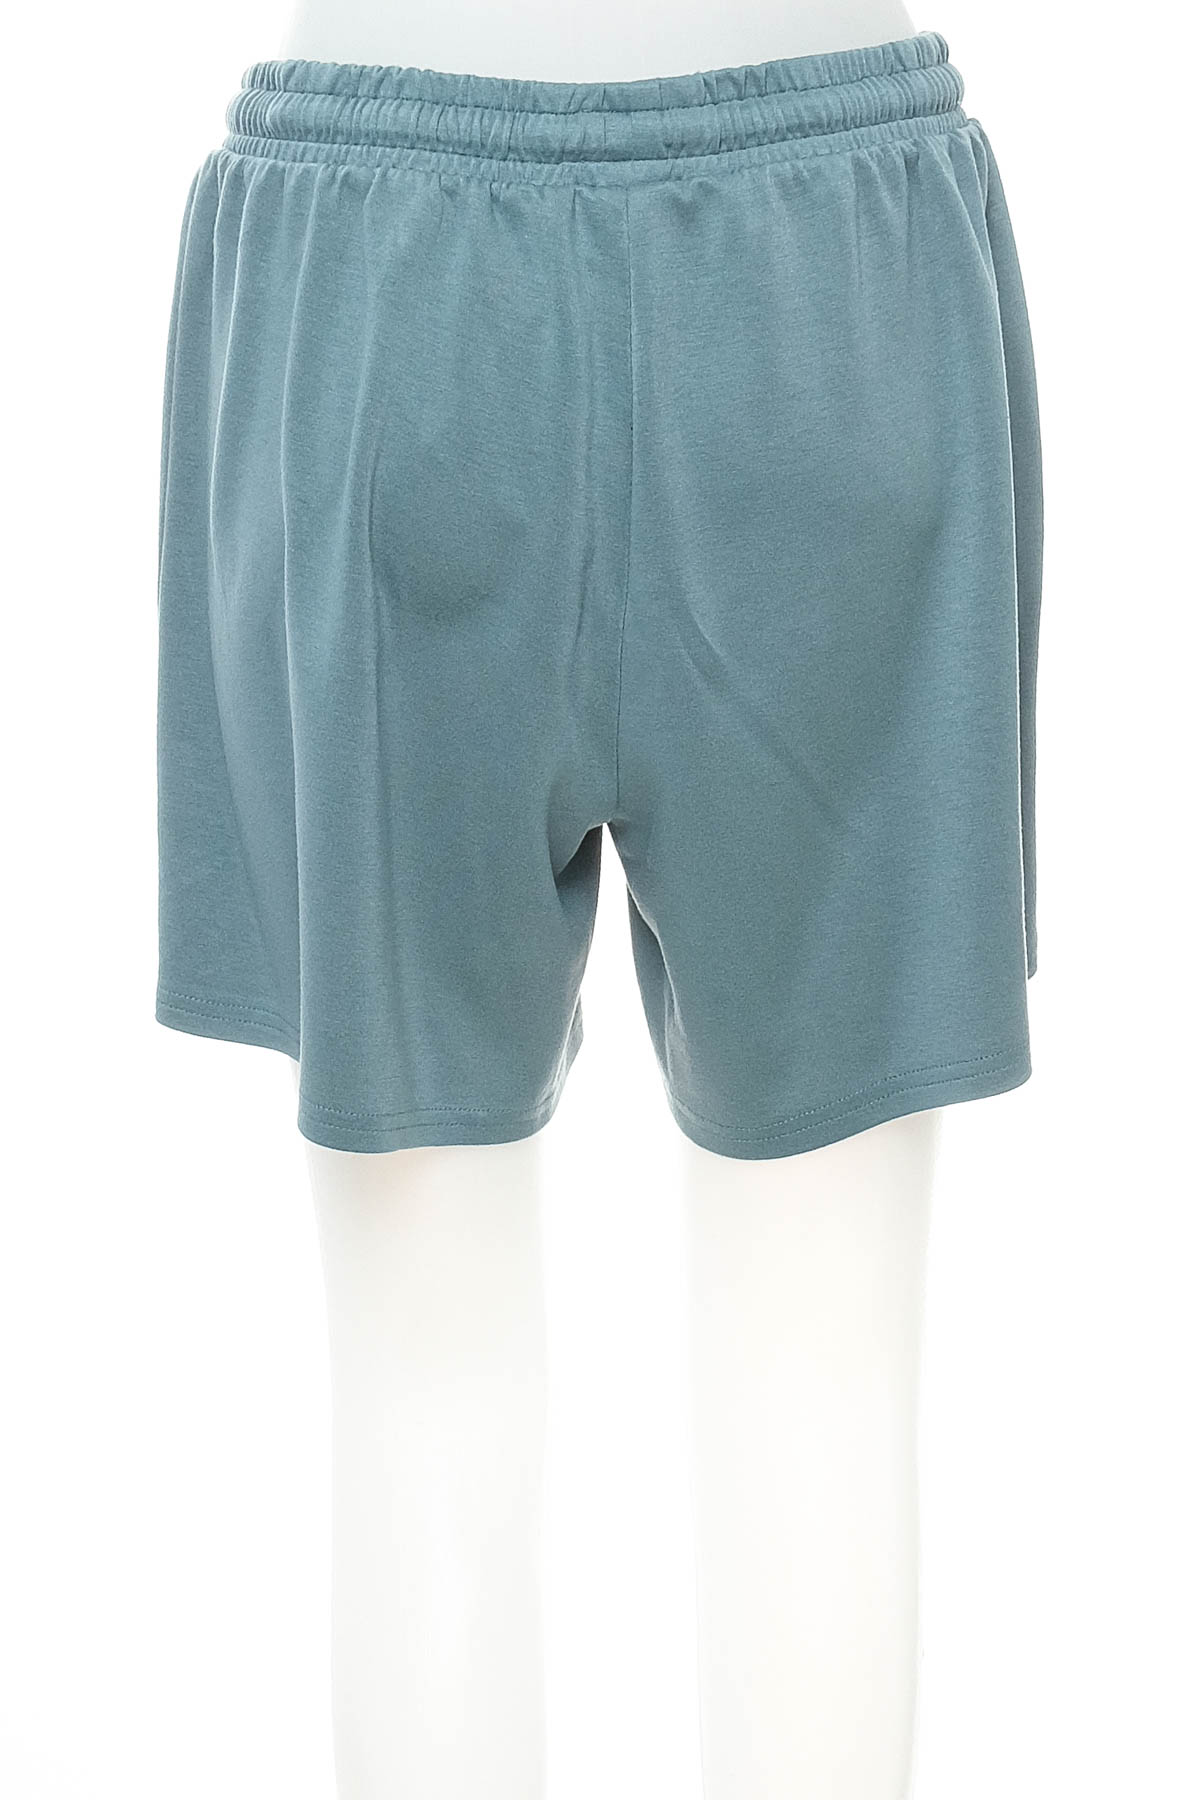 Female shorts - Ergee - 1